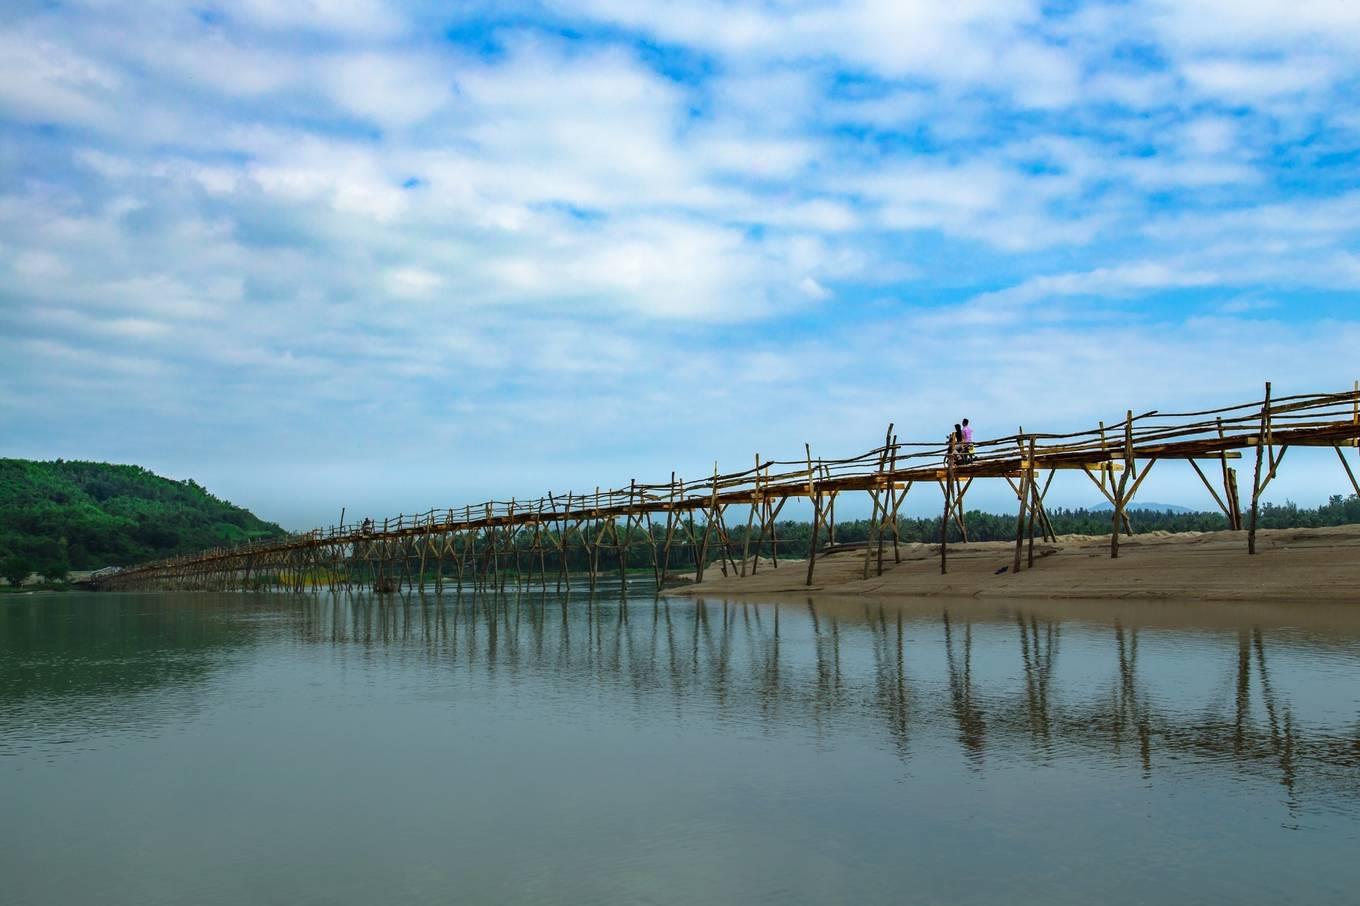 The longest wooden bridge in the world